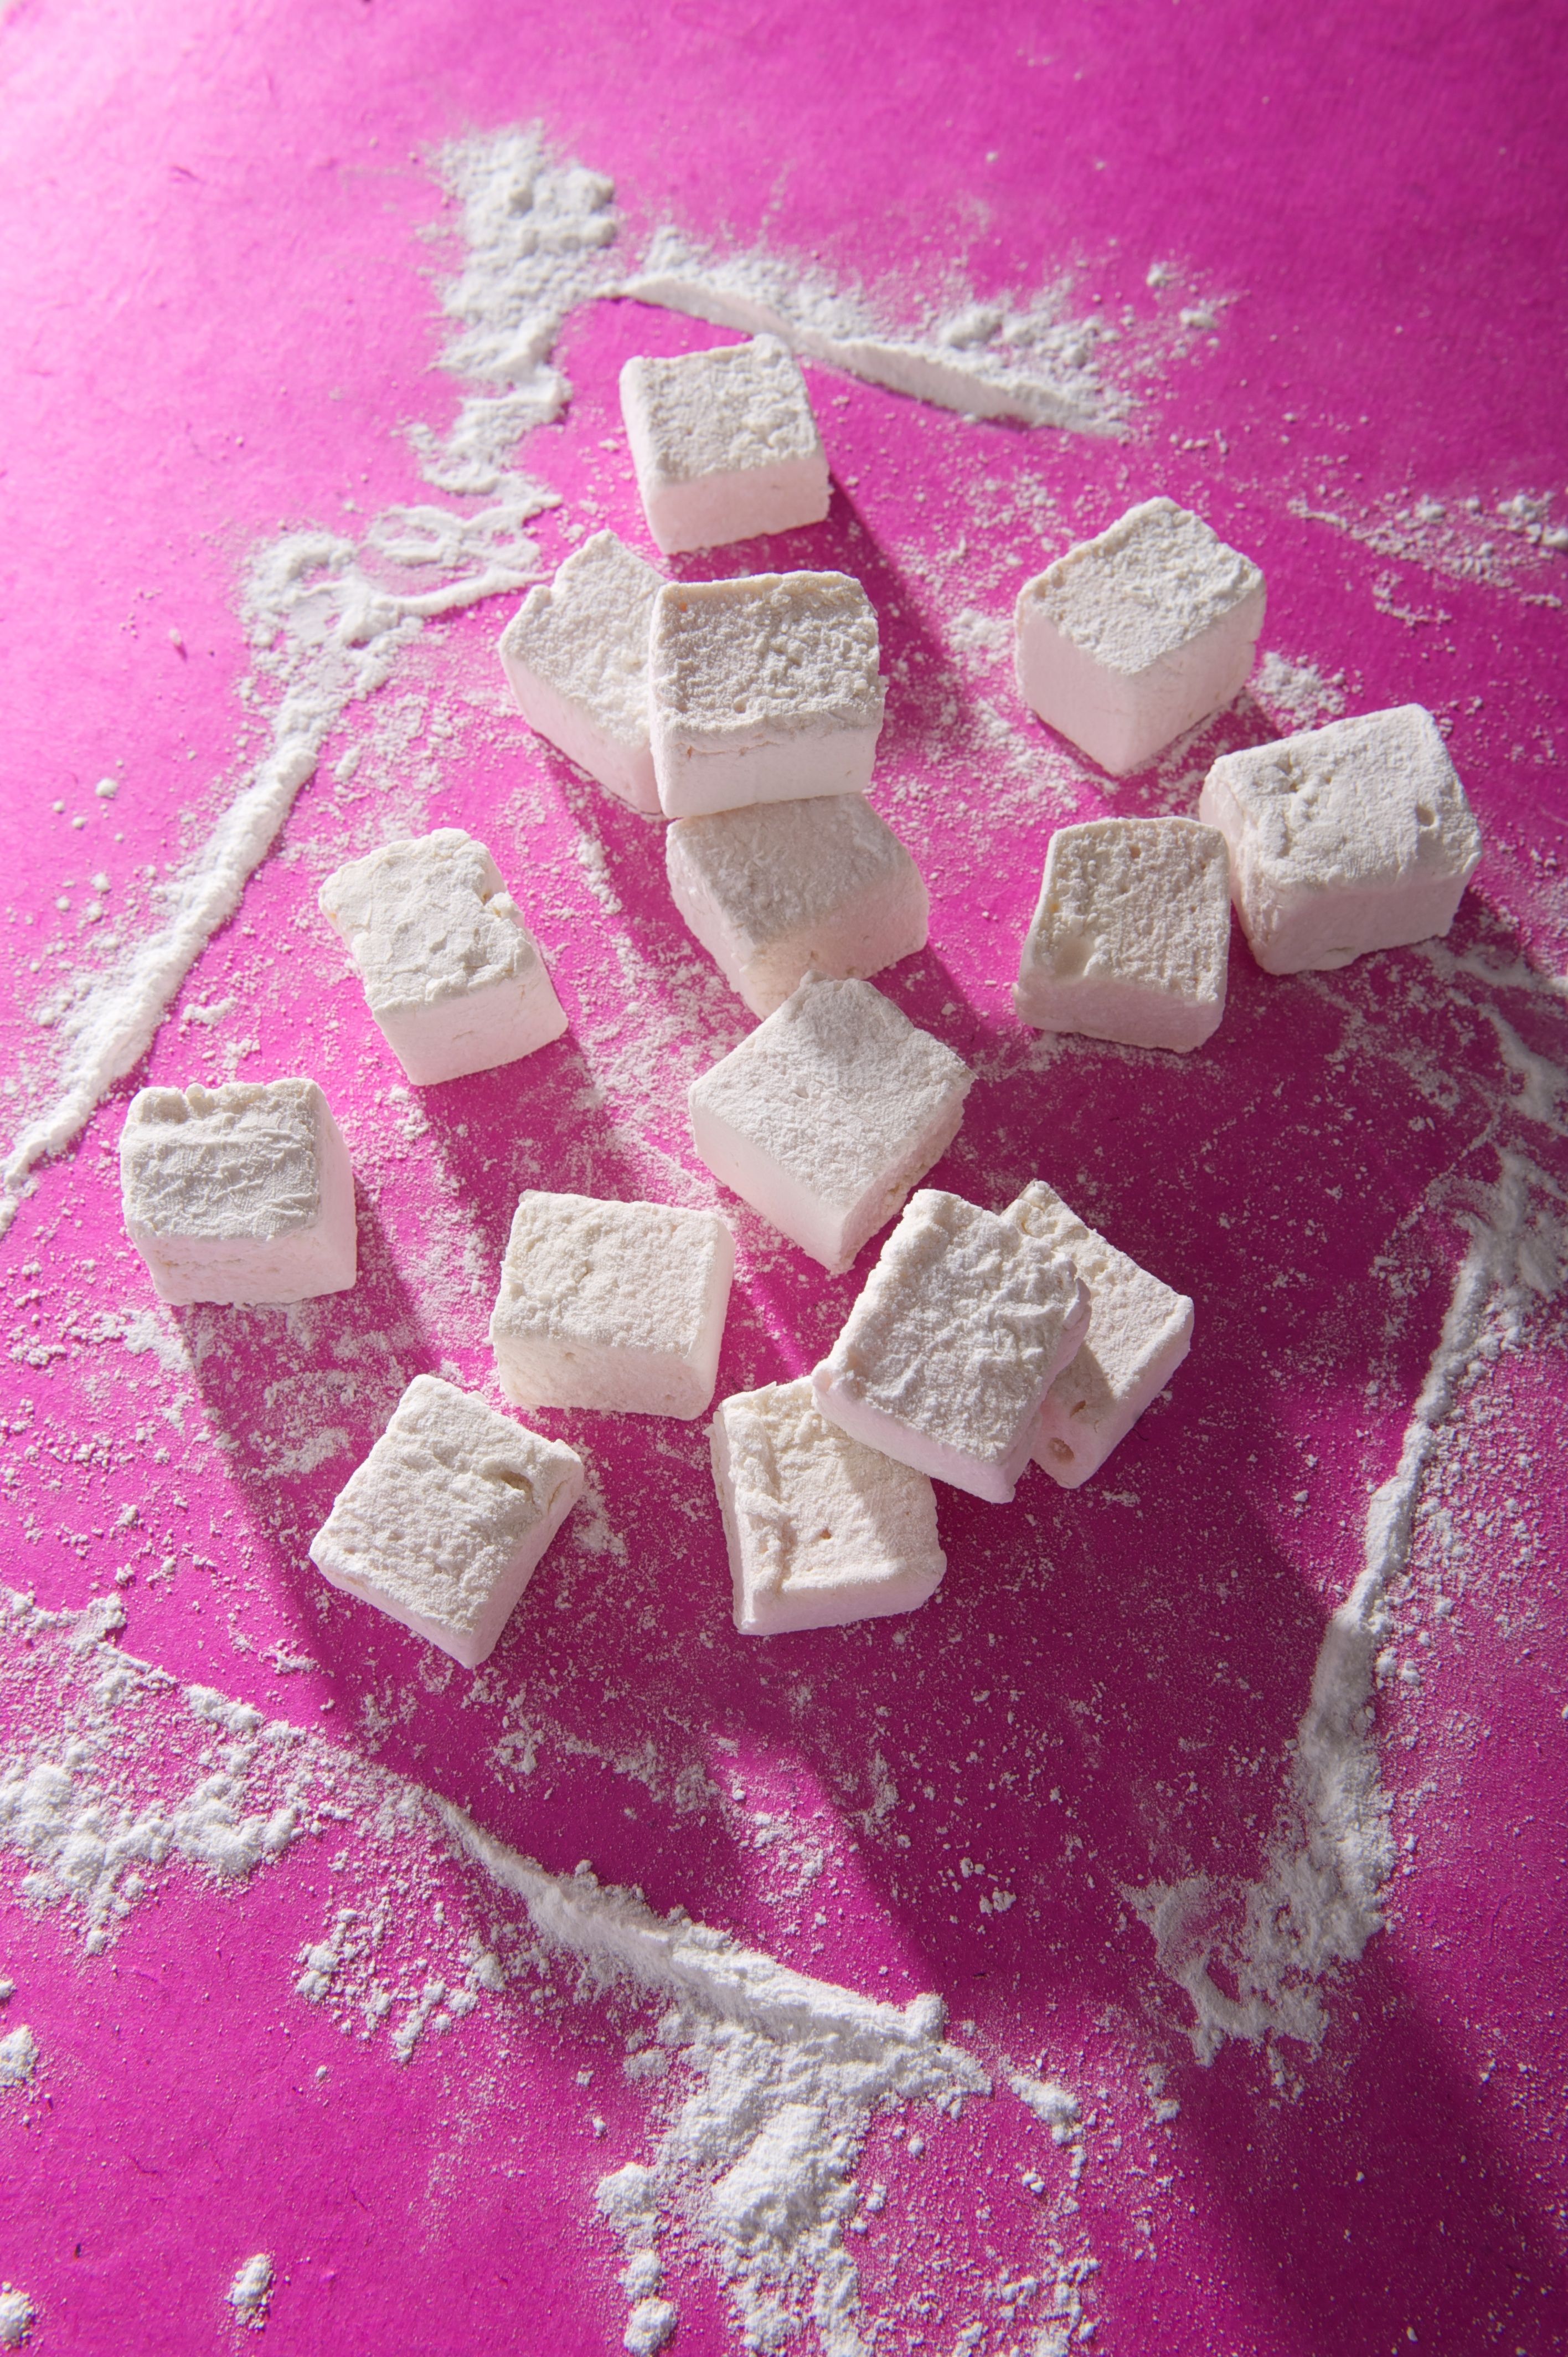 White marshmallows on a pink surface - Marshmallows